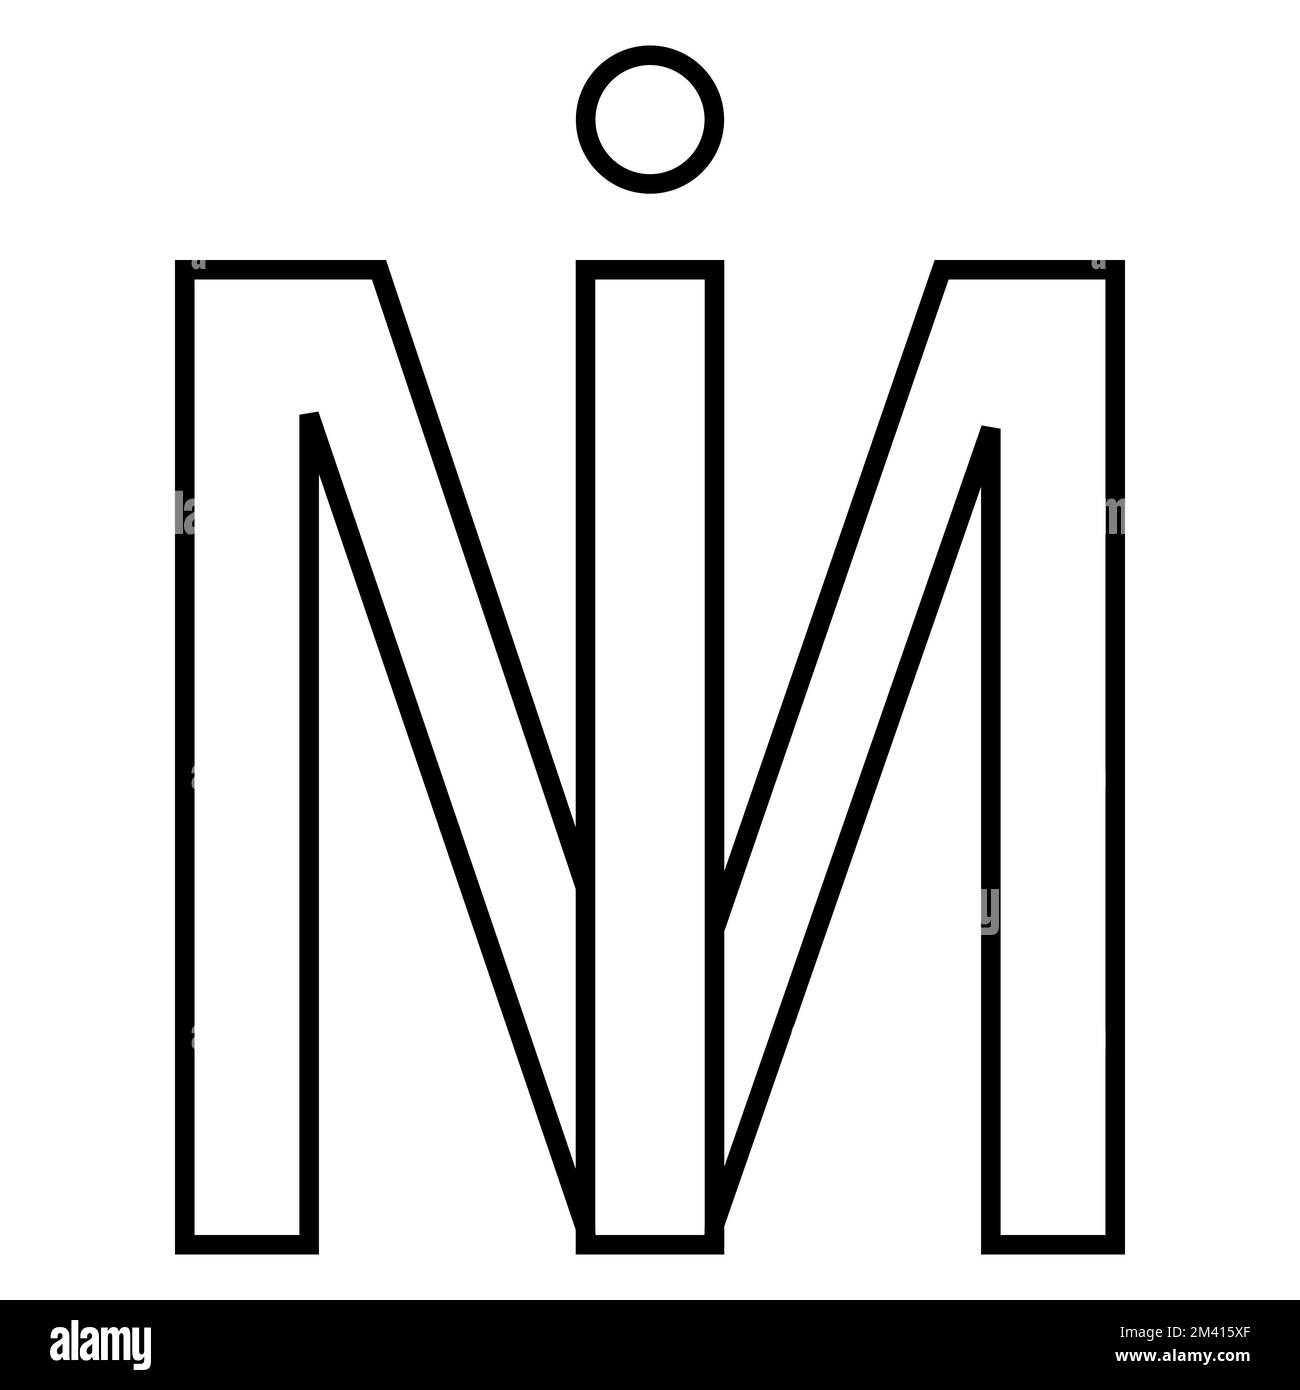 Logo sign im mi icon, nft interlaced letters i m Stock Vector